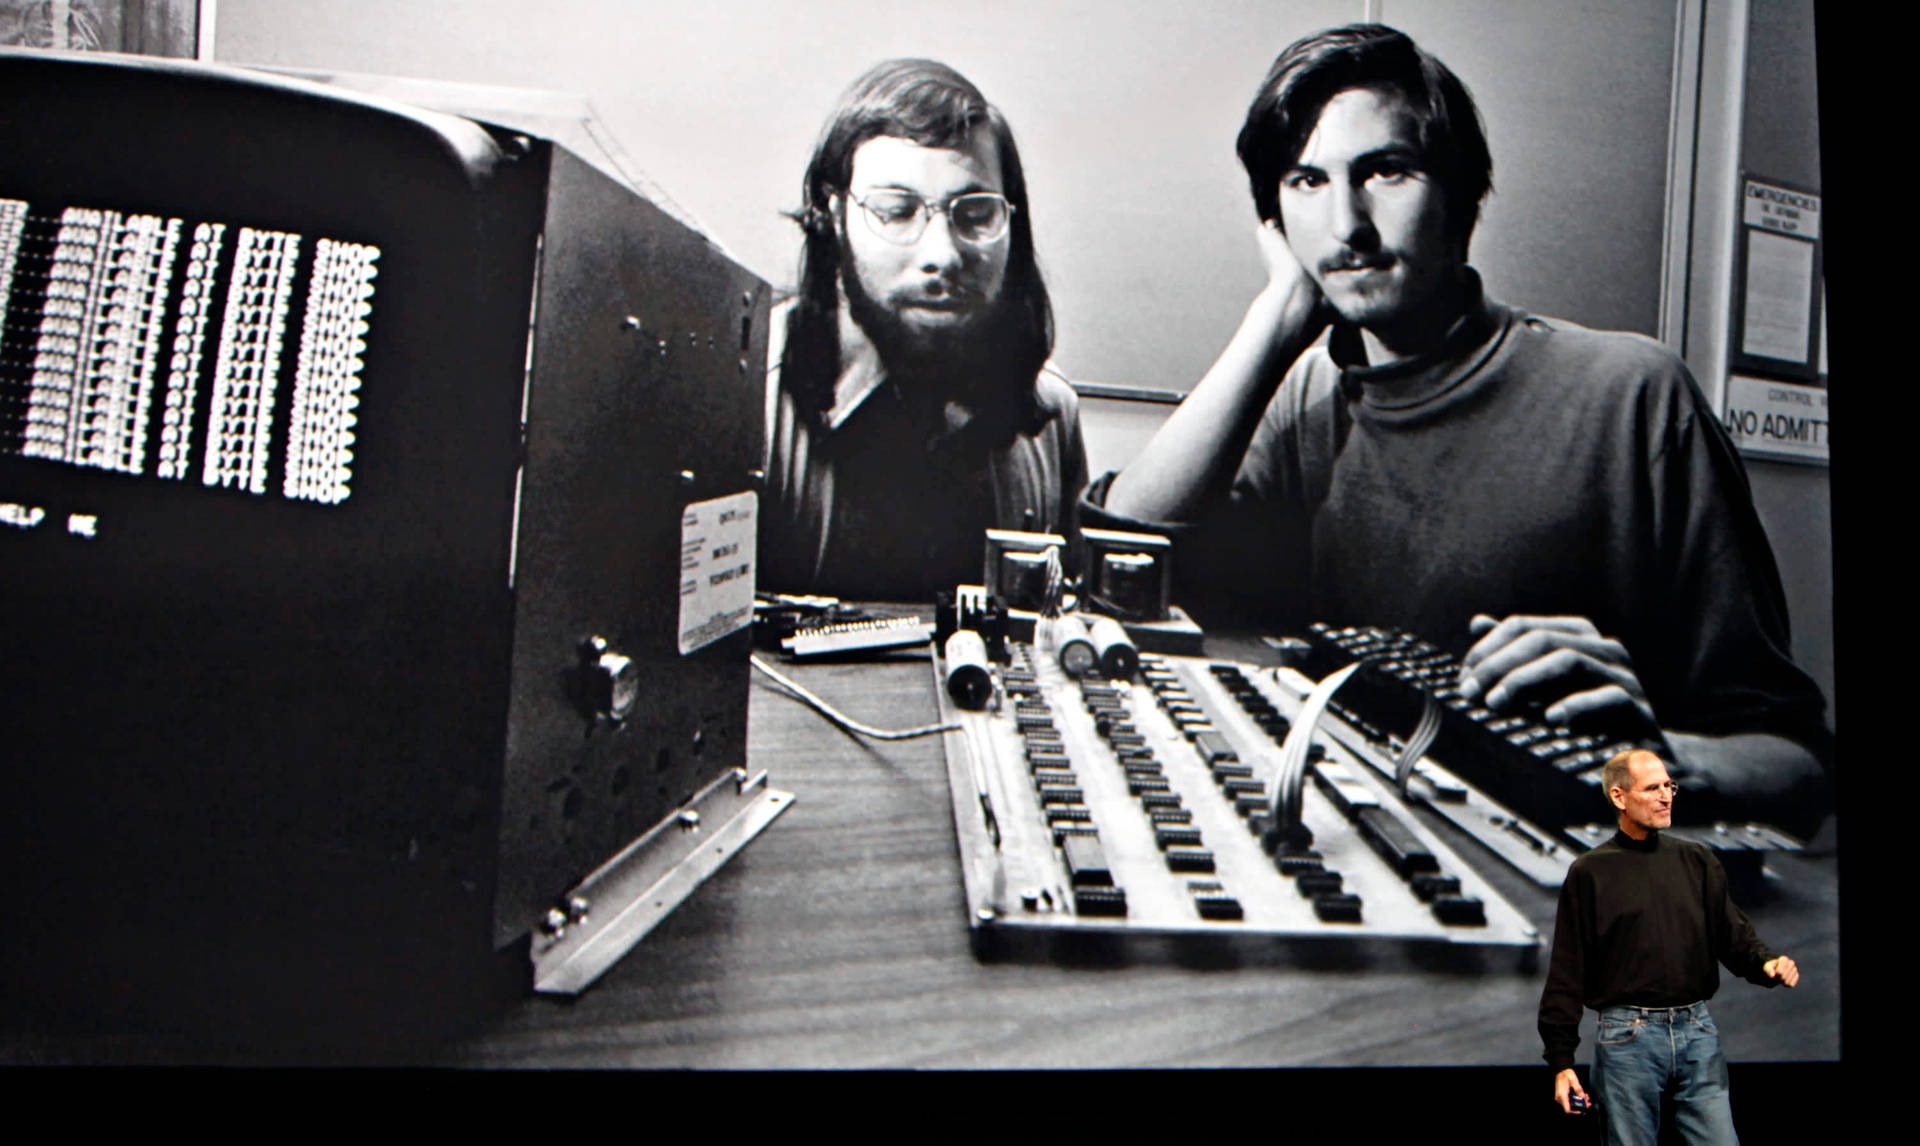 Ungasteve Jobs Och Steve Wozniak Under Presentationen. Wallpaper